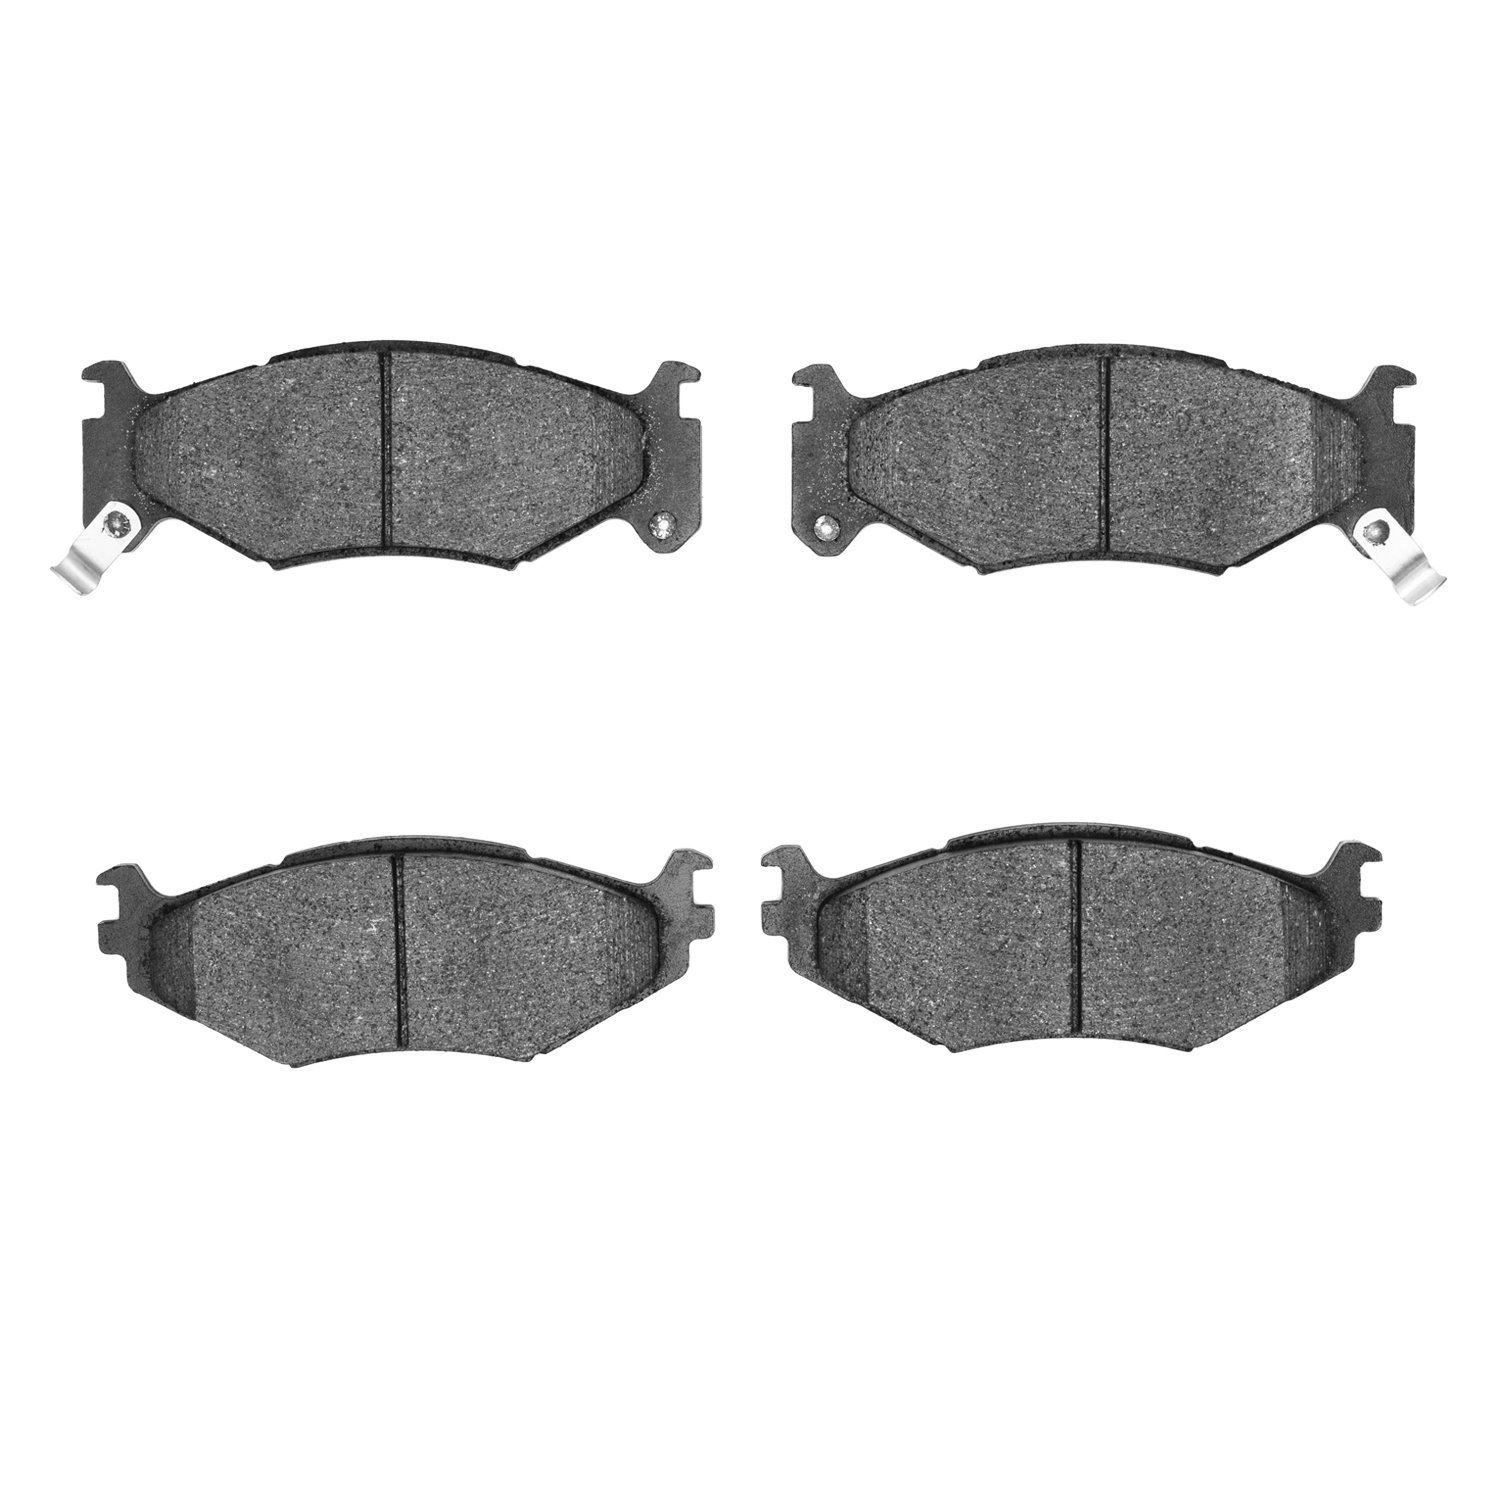 1310-0522-00 3000-Series Ceramic Brake Pads, 1991-1995 Mopar, Position: Front